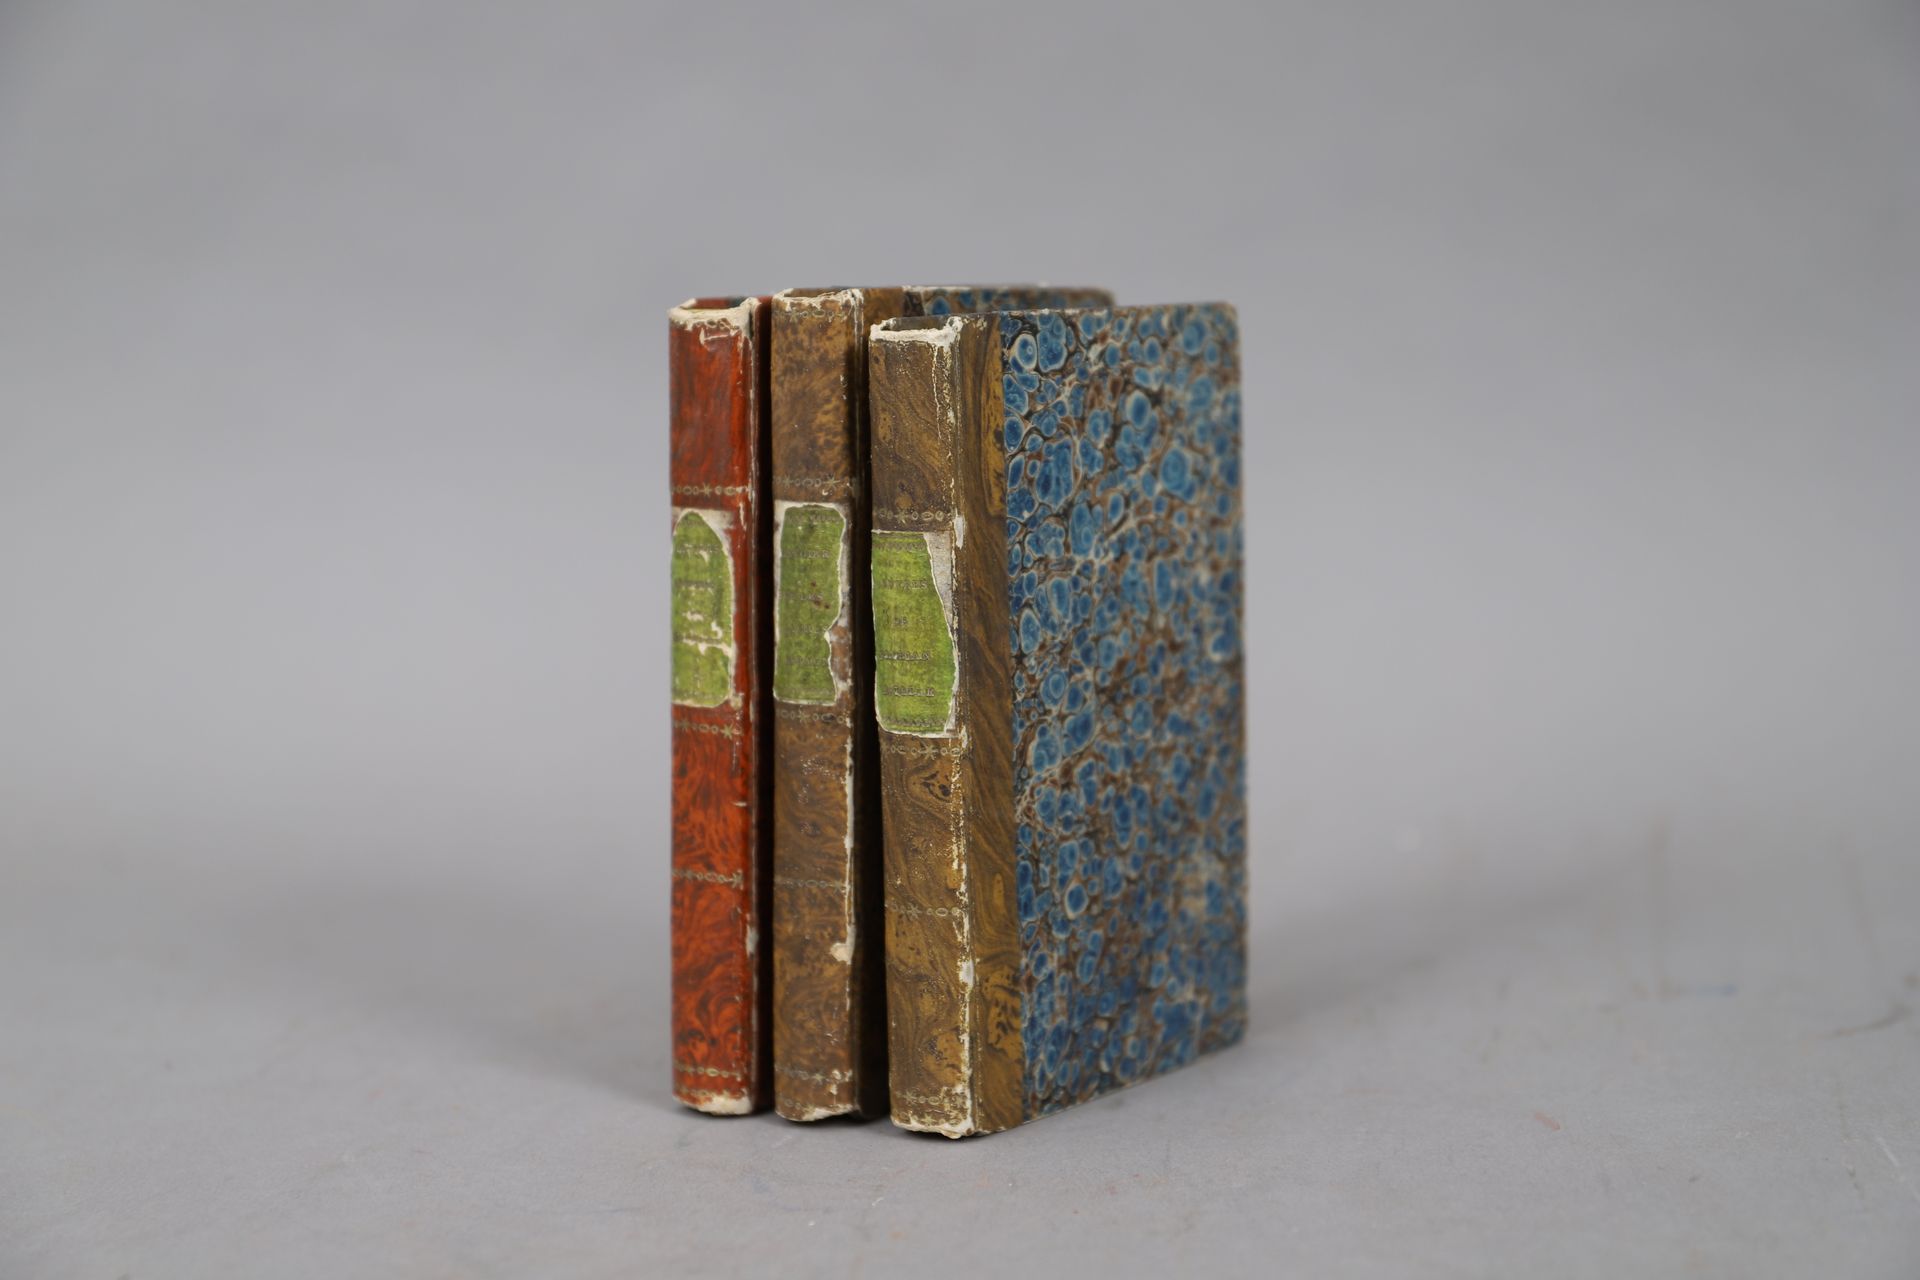 Null ŒUVRES de FLORIAN

3 volumes 

1820.